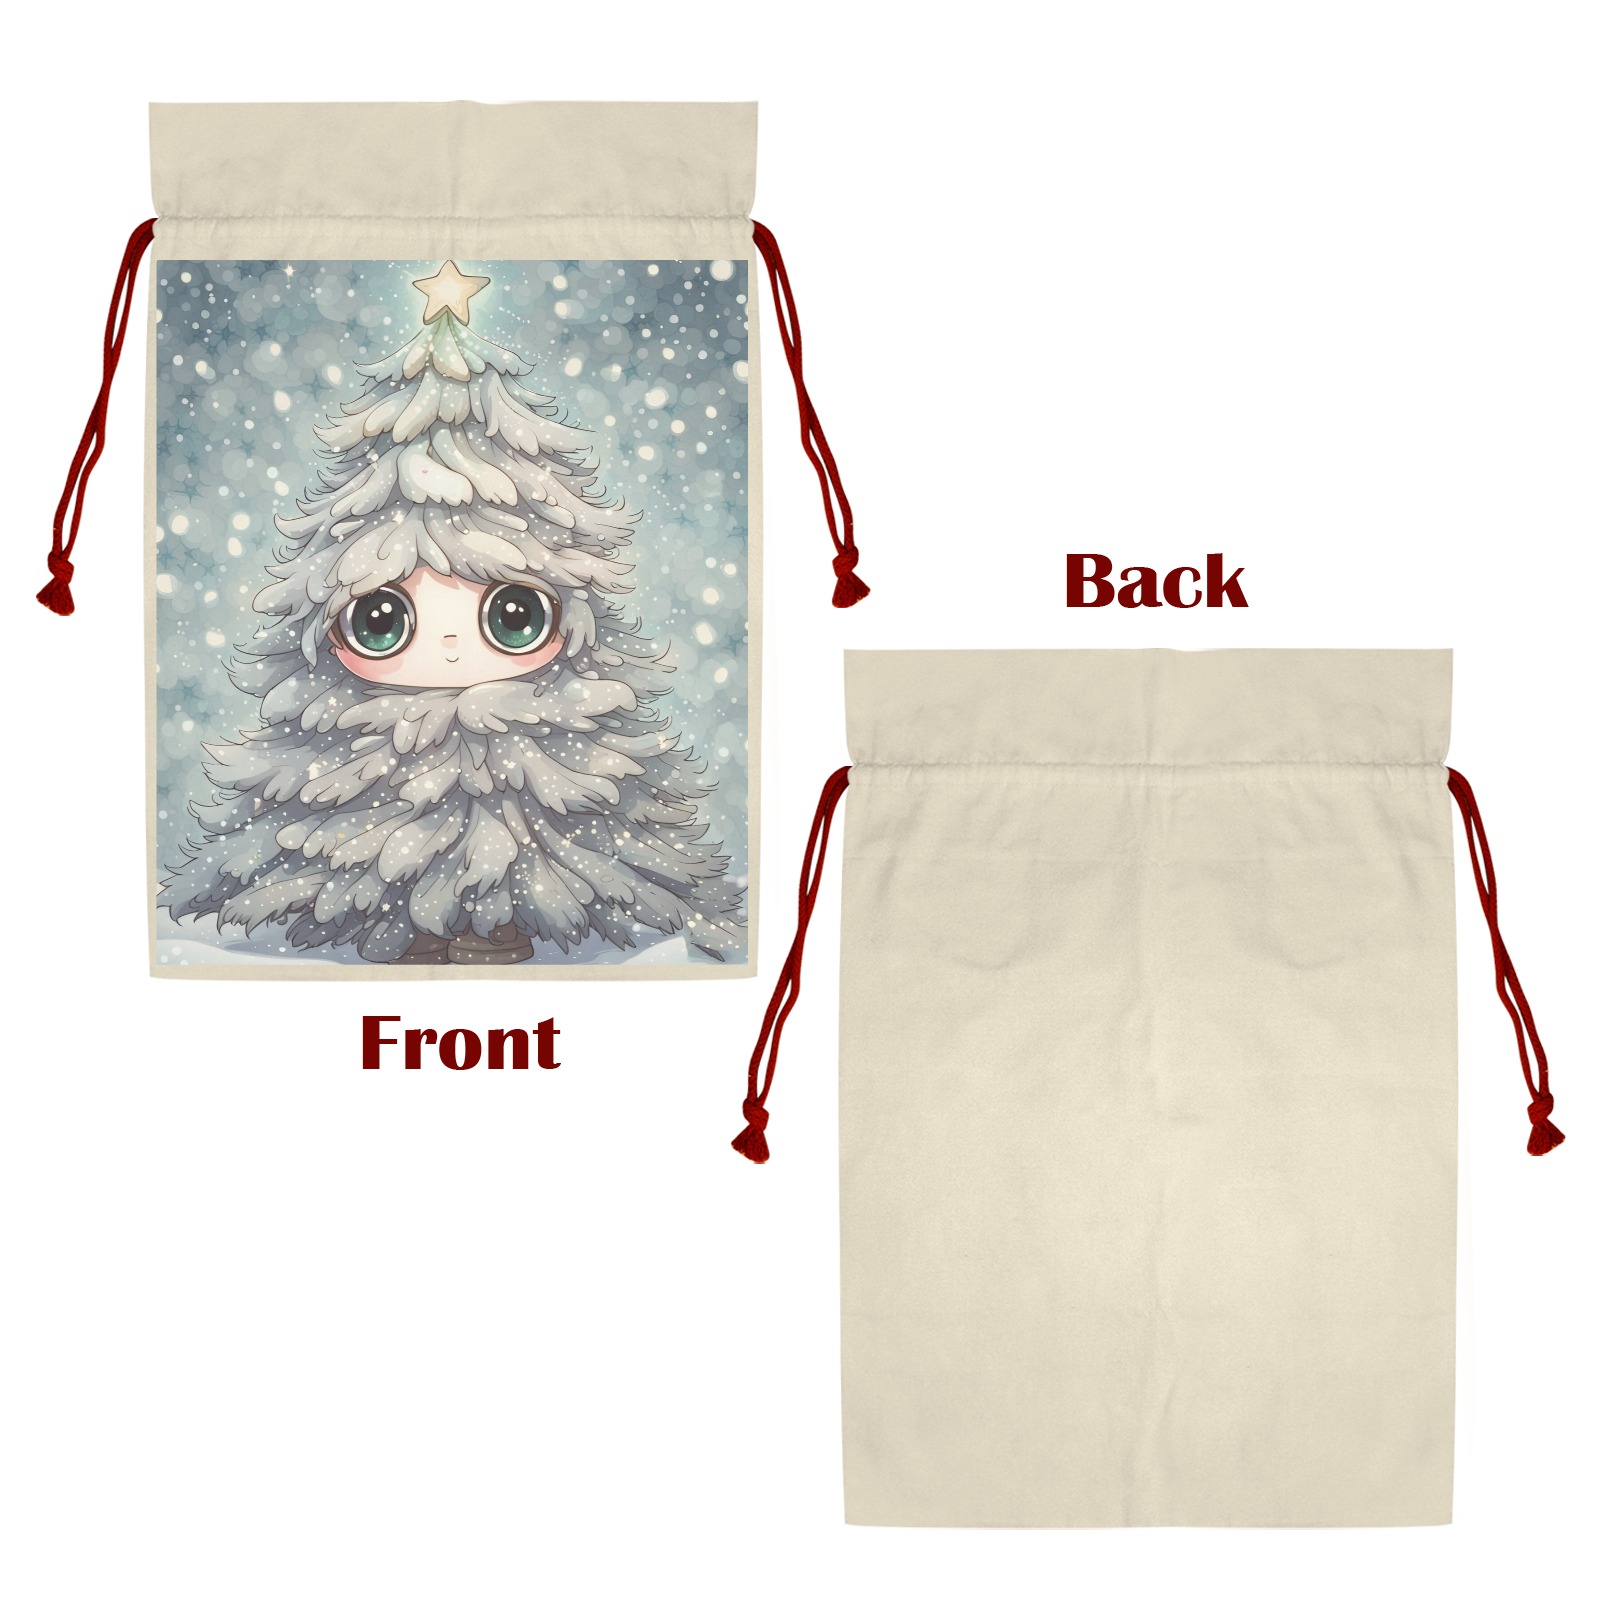 Little Christmas Tree Santa Claus Drawstring Bag 21"x32" (One-Sided Printing)